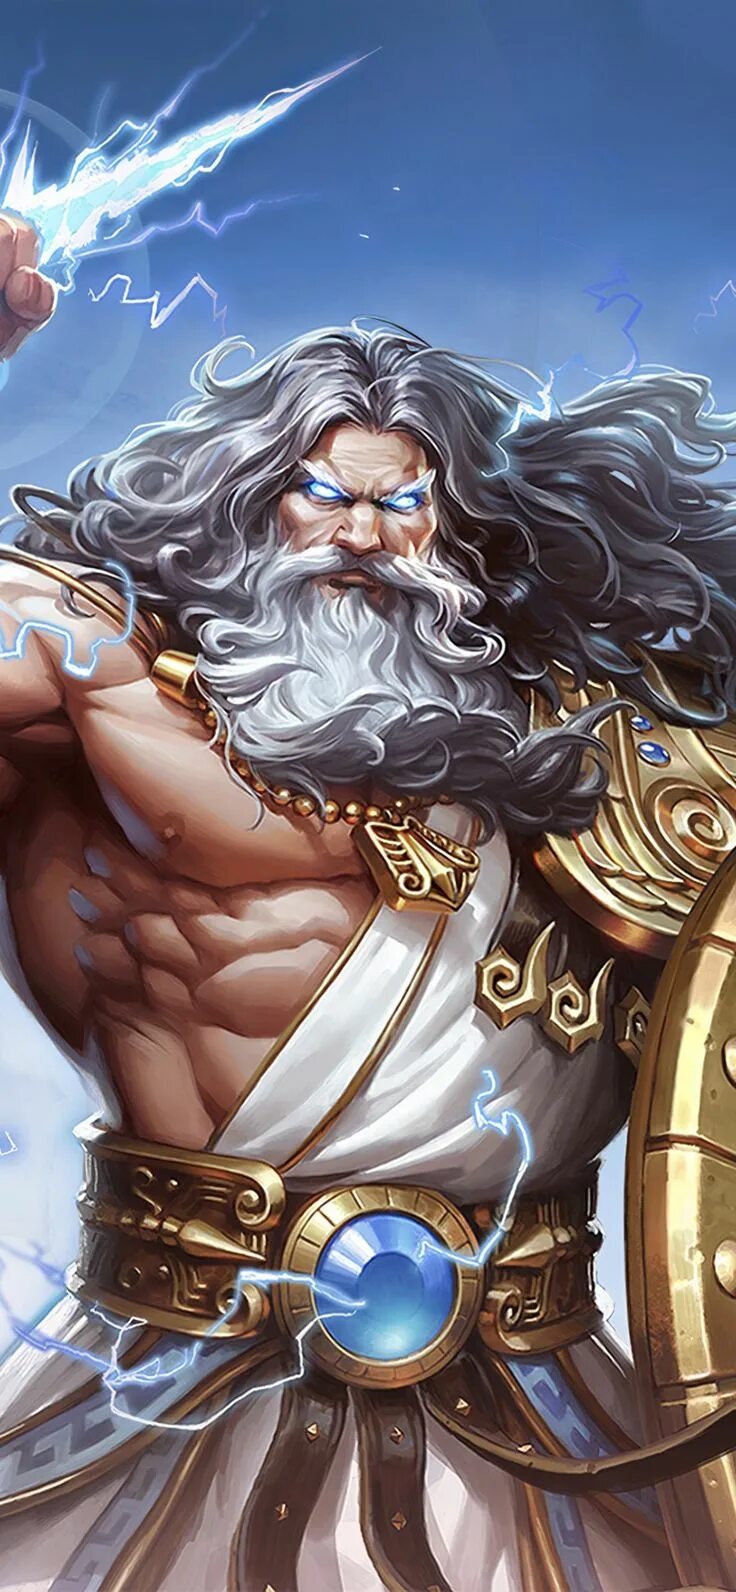 Zeus master. Zeus Master of Olympus 2019. Зевс Смайт. Боги мифологии. Цифровой Бог.